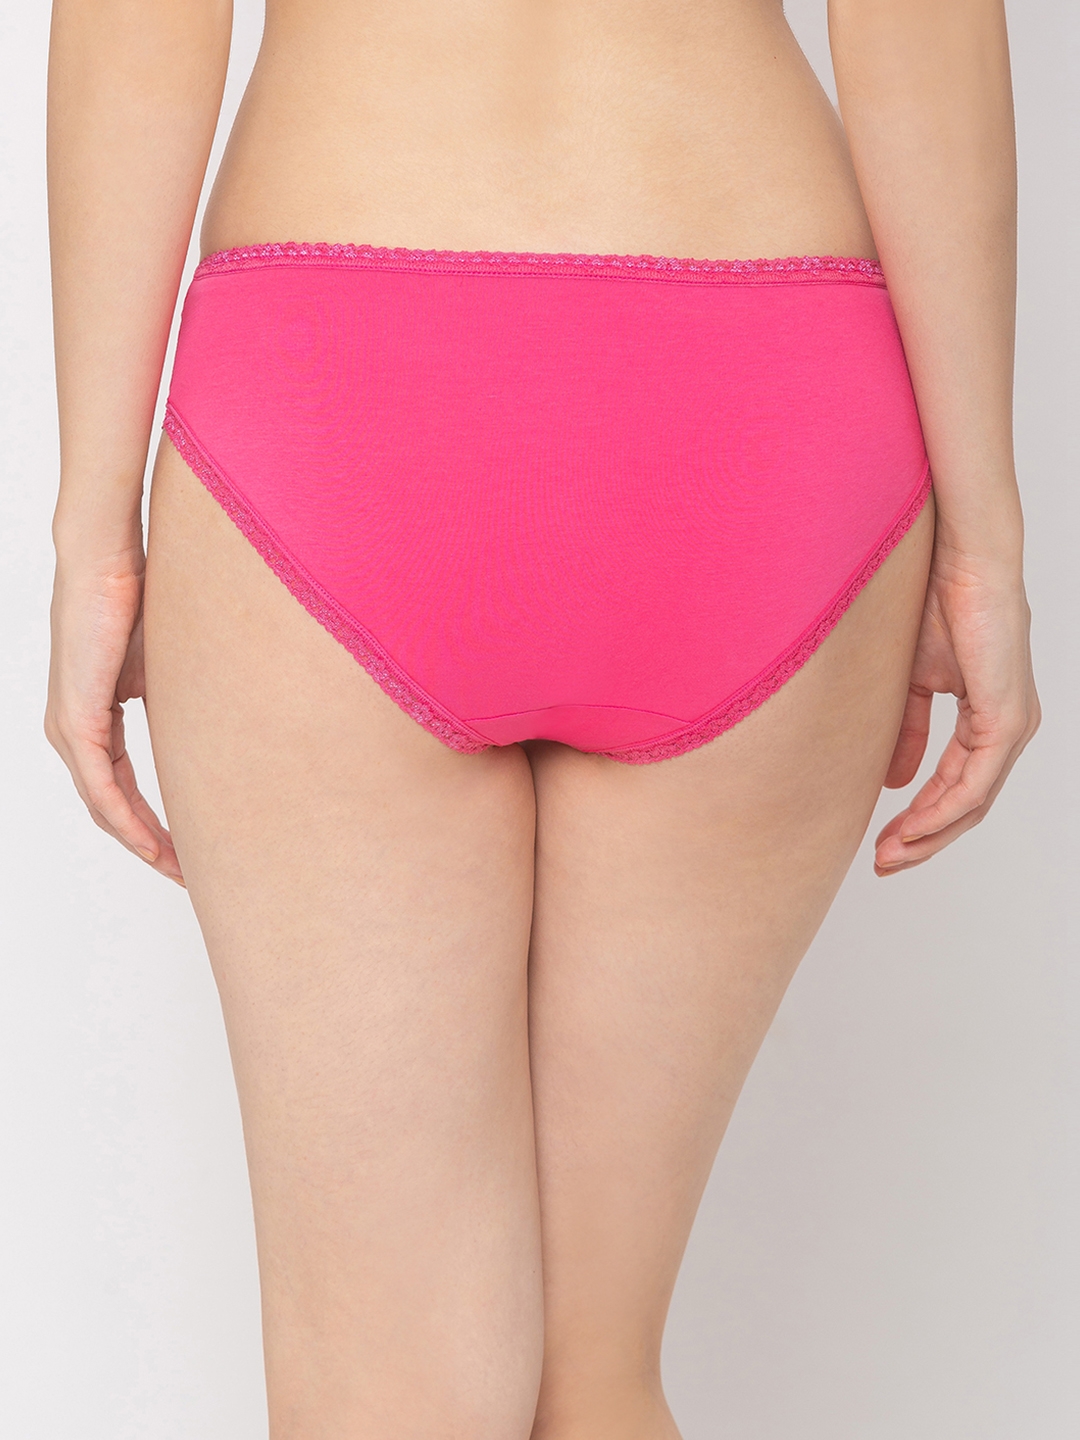 CANDYSKIN | Candyskin Womens's Cotton Lace Bikini Panty (Pack of 3) 2